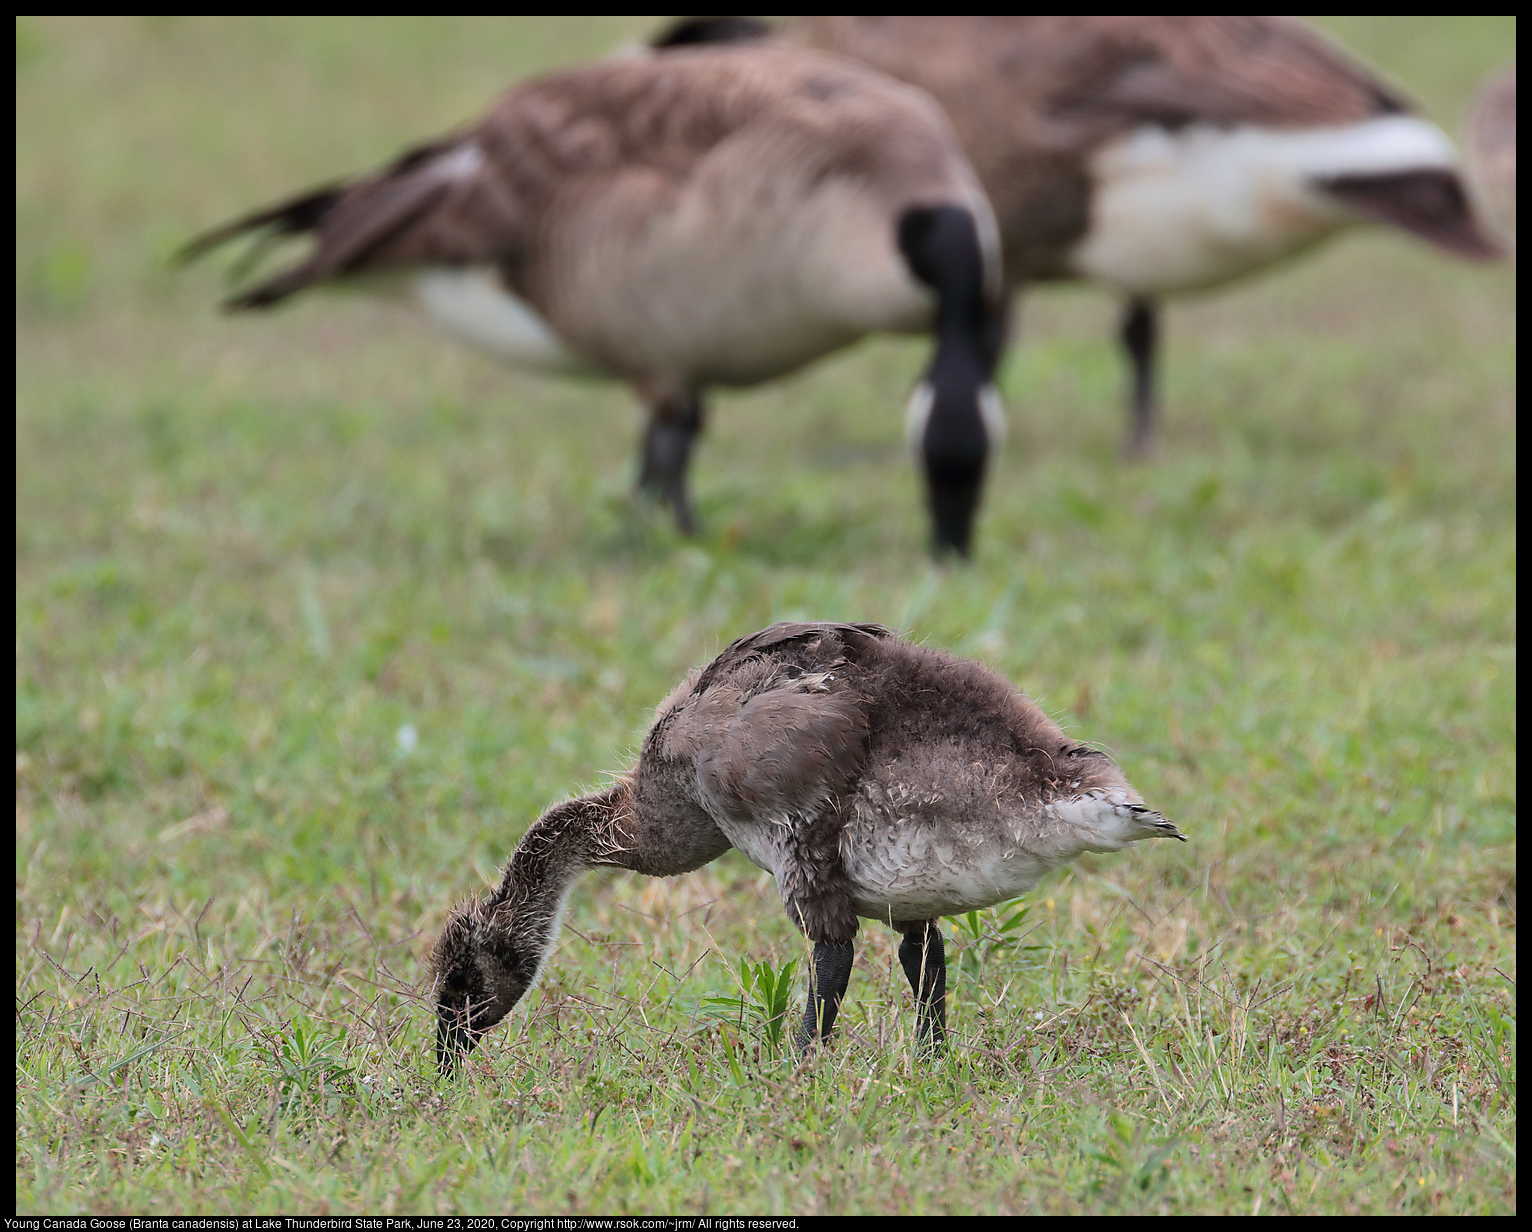 Young Canada Goose (Branta canadensis) at Lake Thunderbird State Park, June 23, 2020